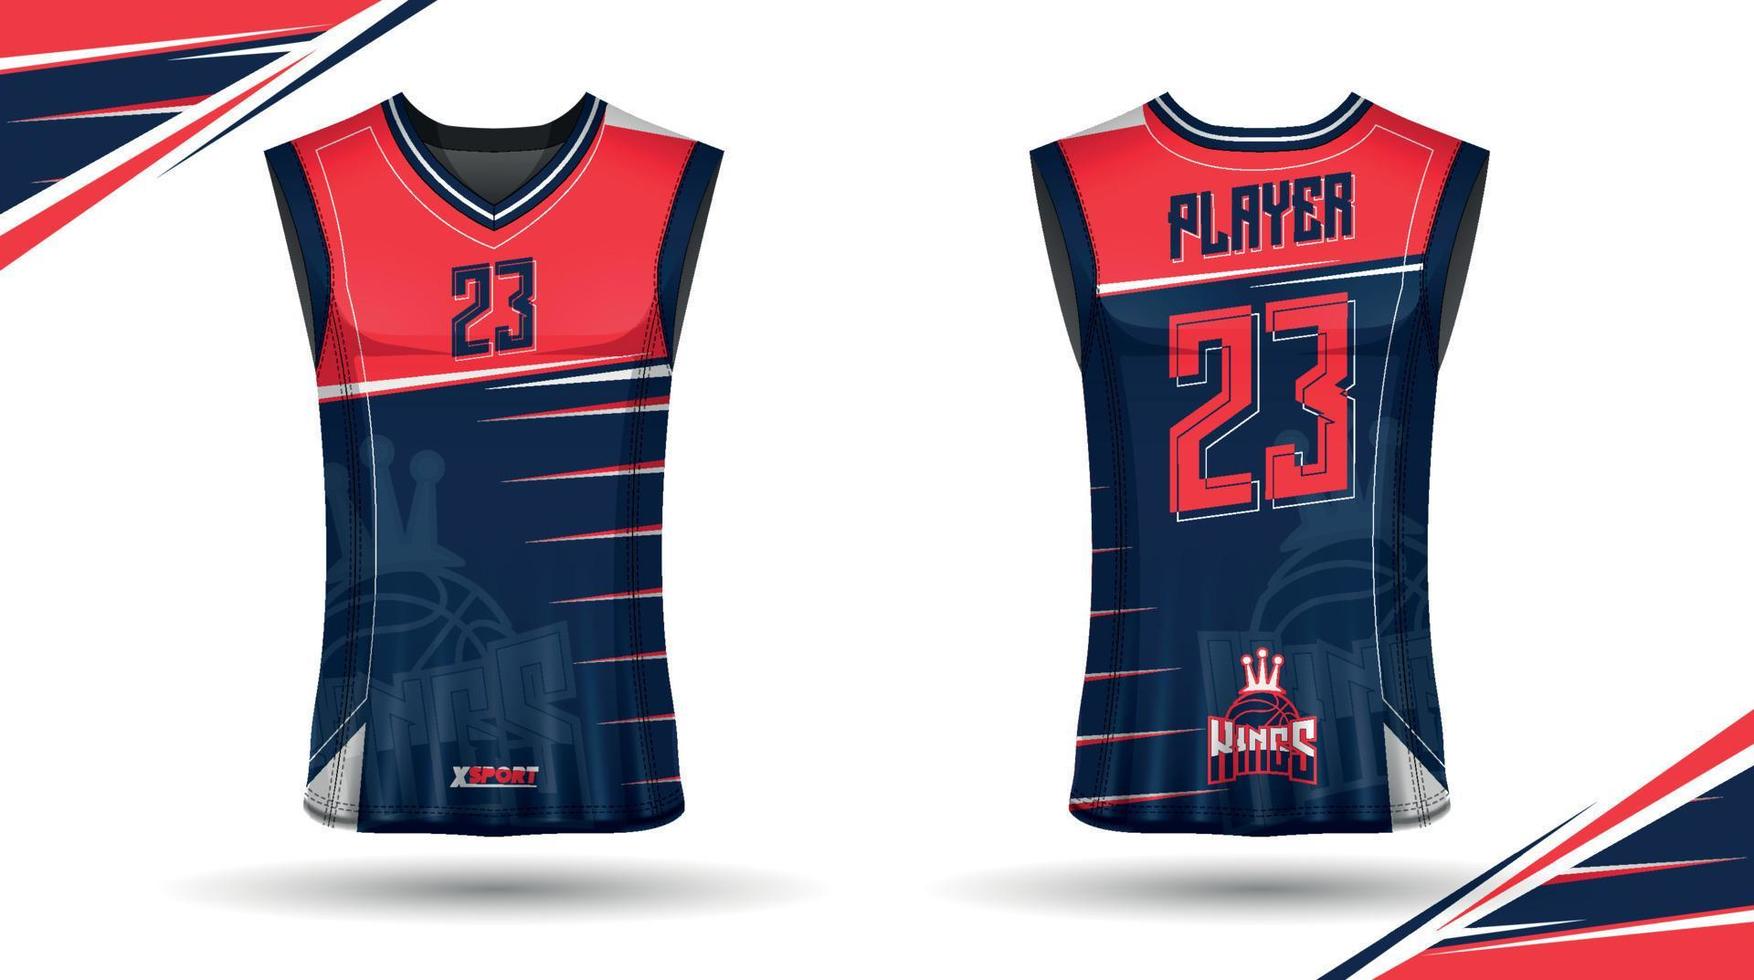 Basketball shirt design, front and back vector